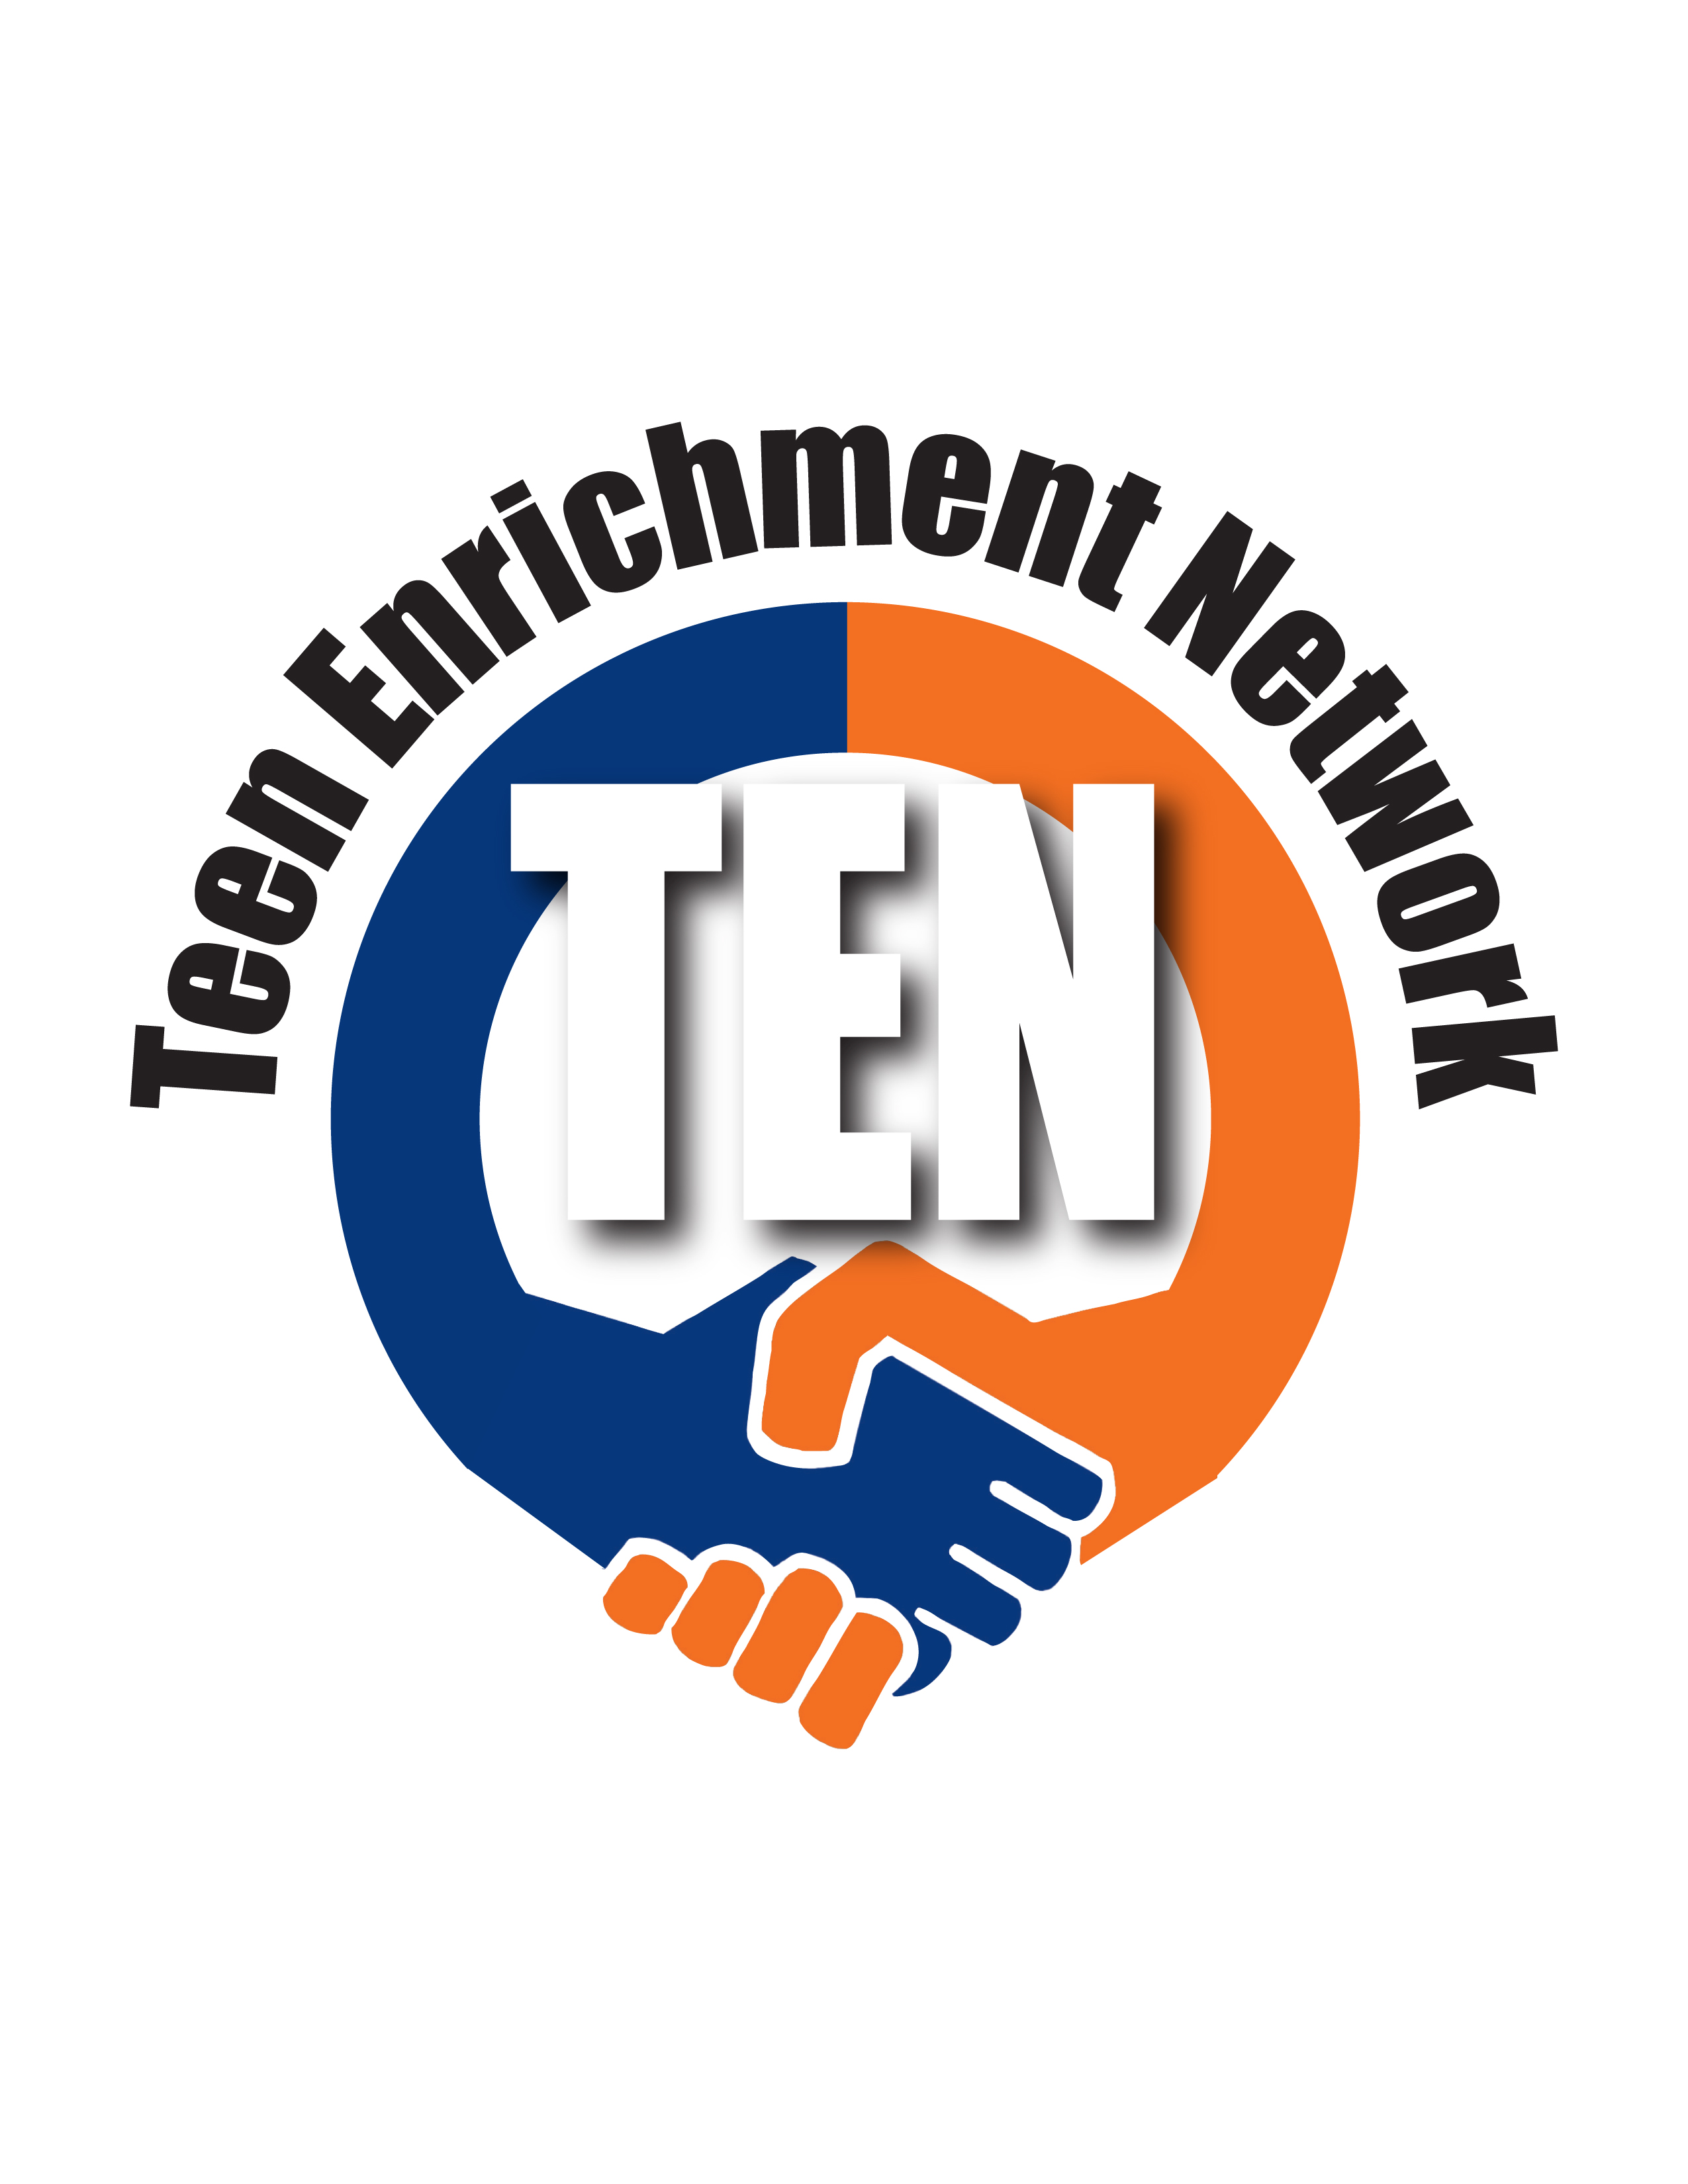 Teen Enrichment Network logo